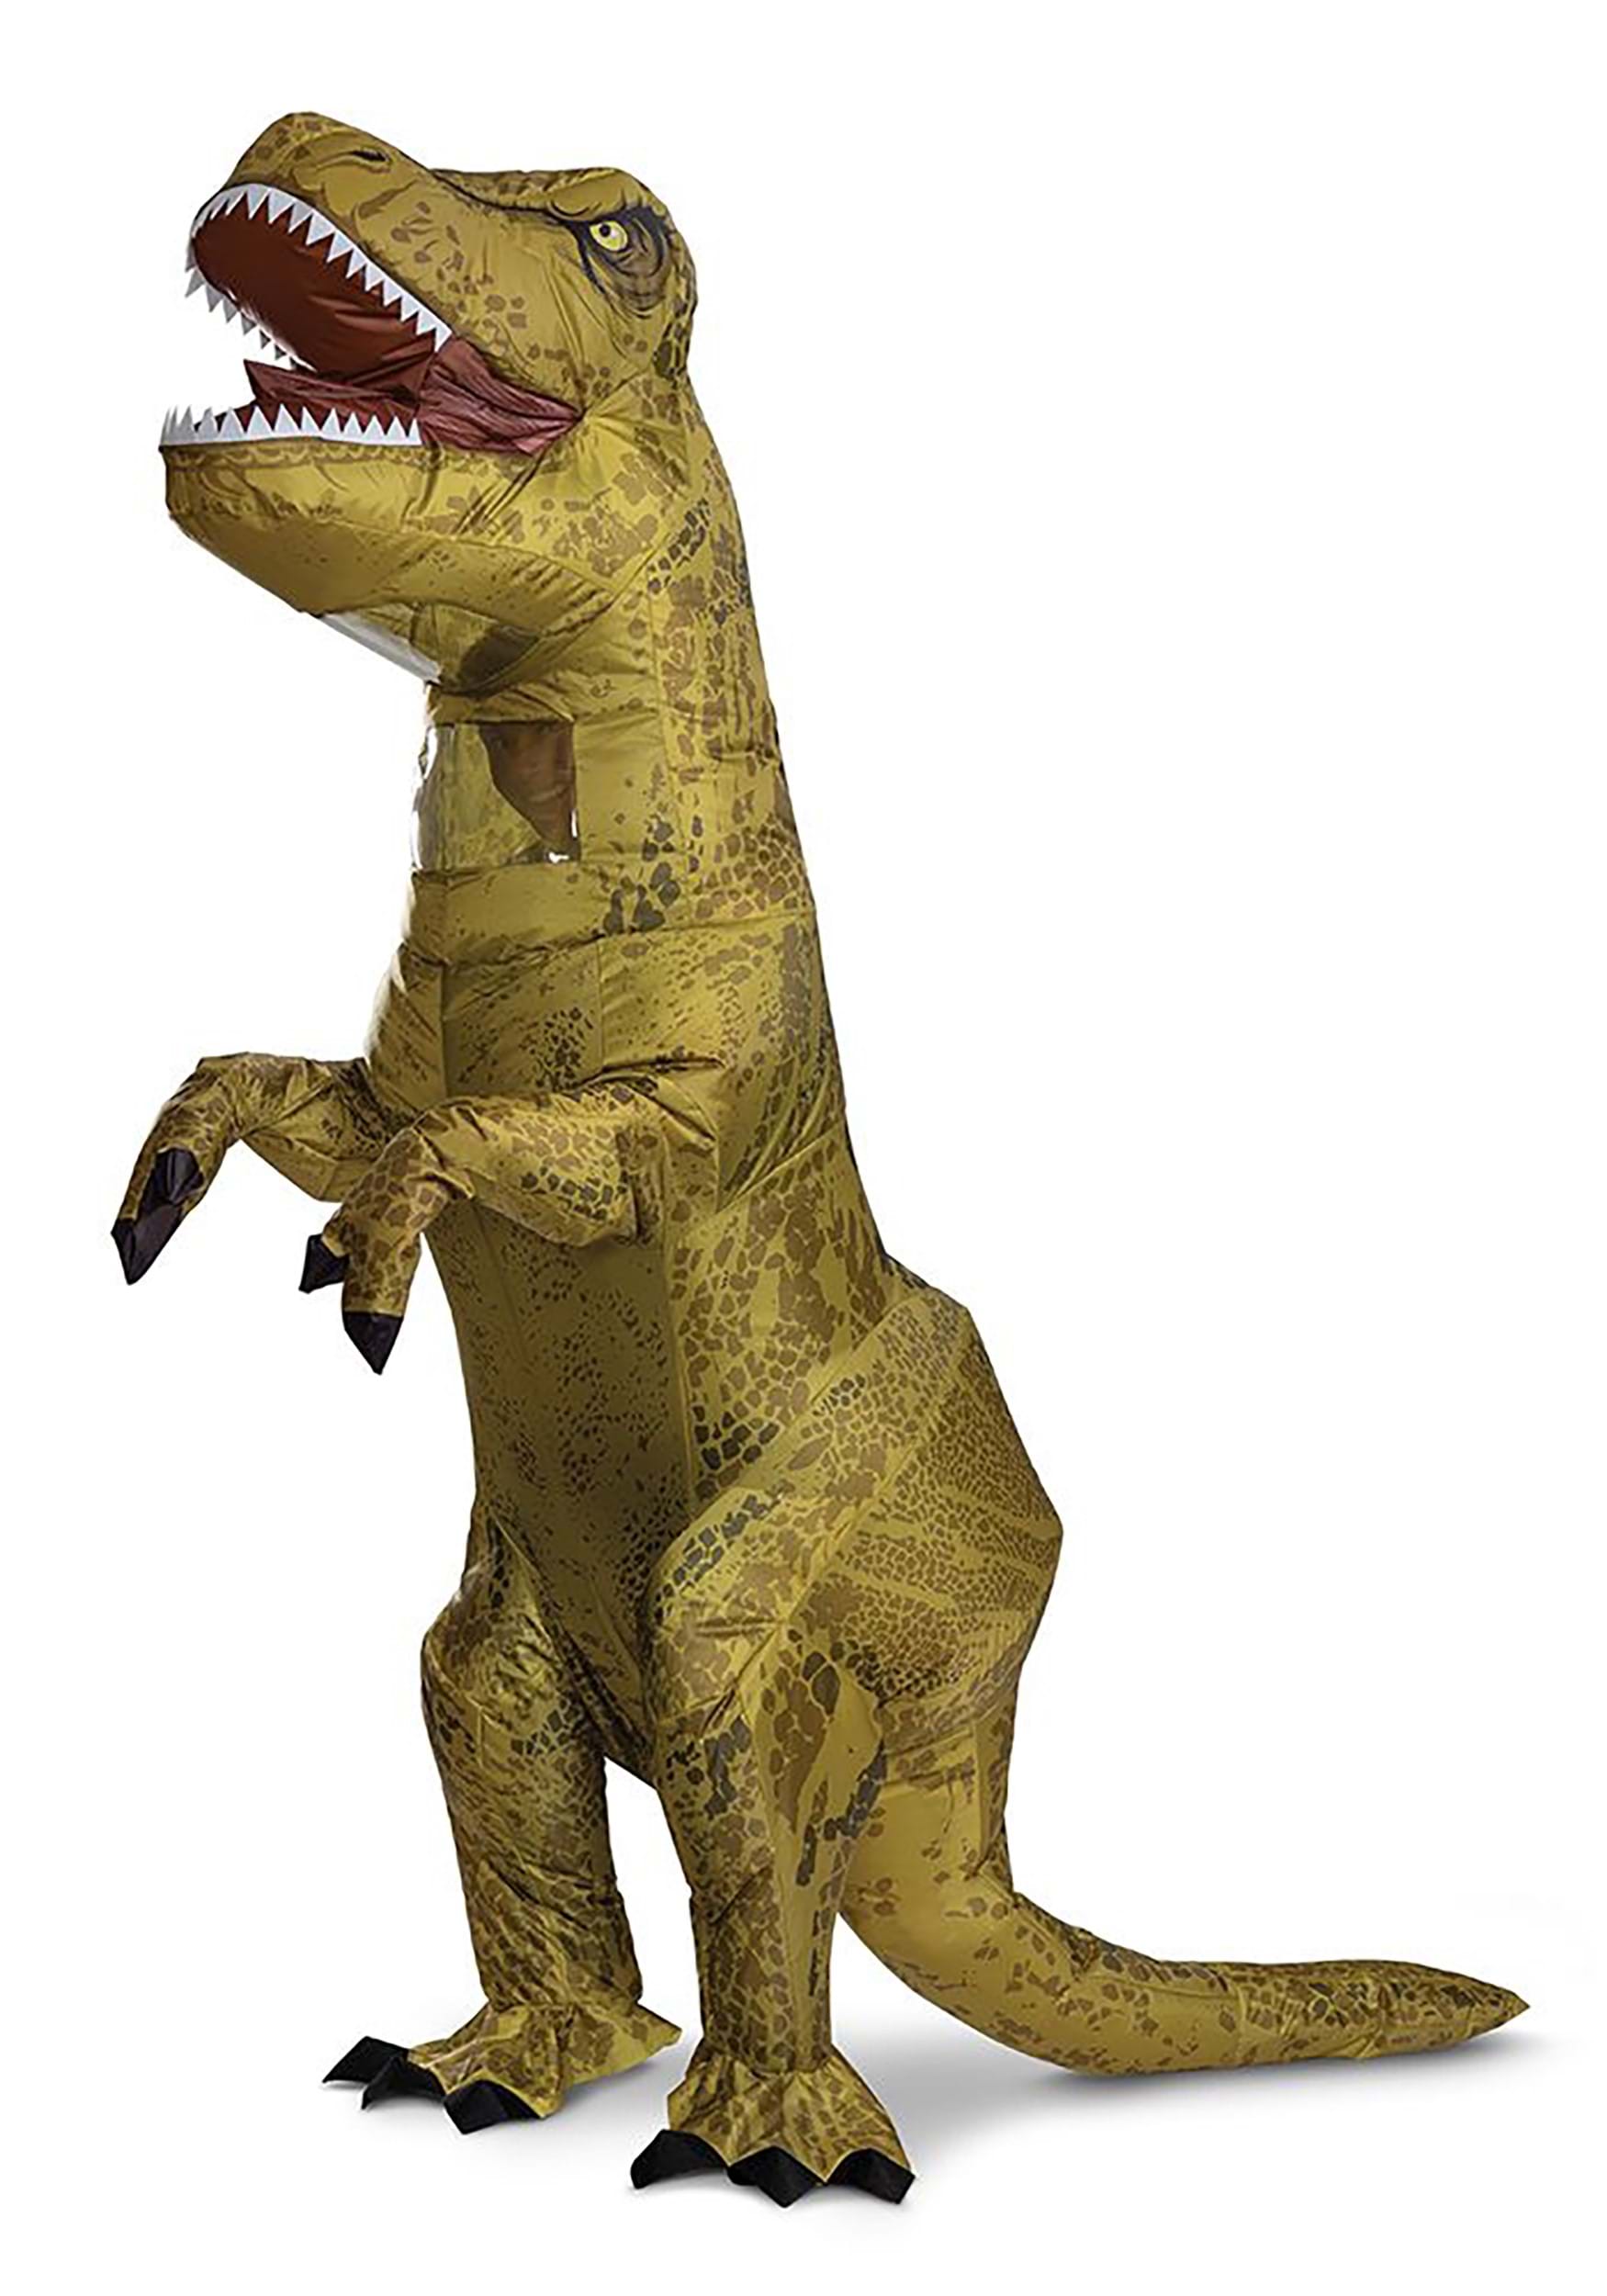 Disfraz inflable de Jurassic World T-Rex para adultos Multicolor